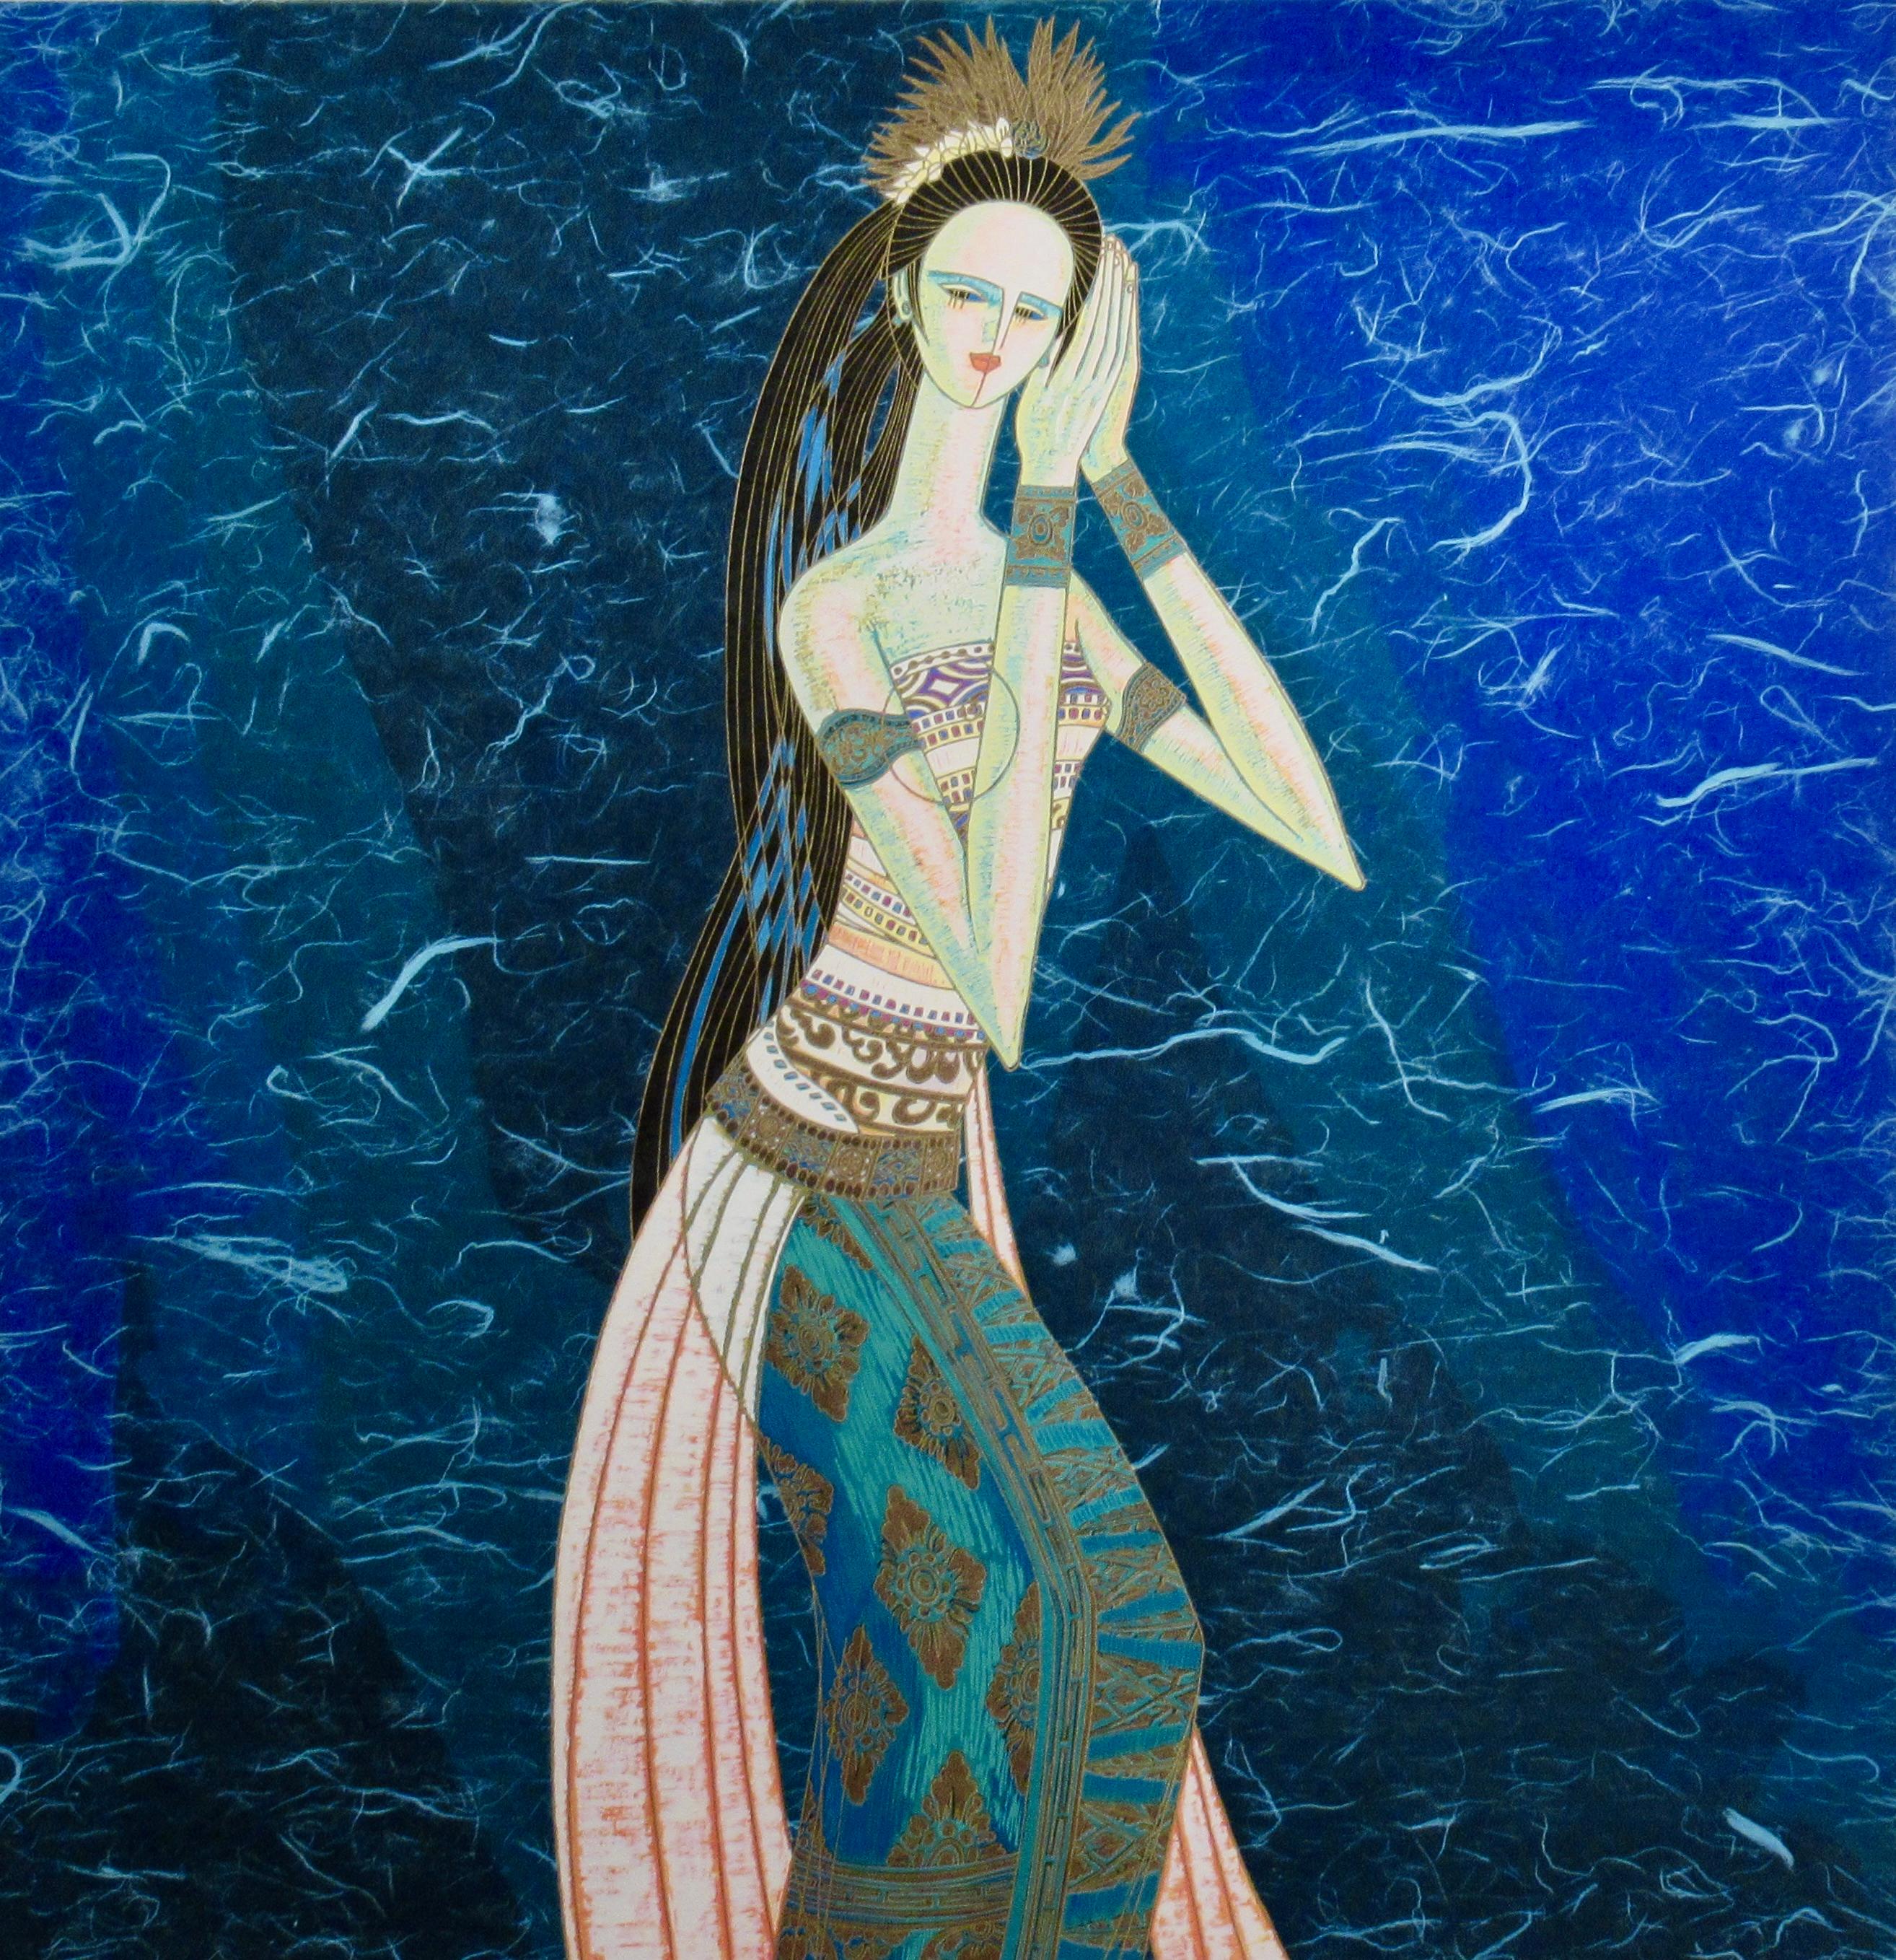 Bali Princesse (variante bleue) - Print de Ting Shao Kuang